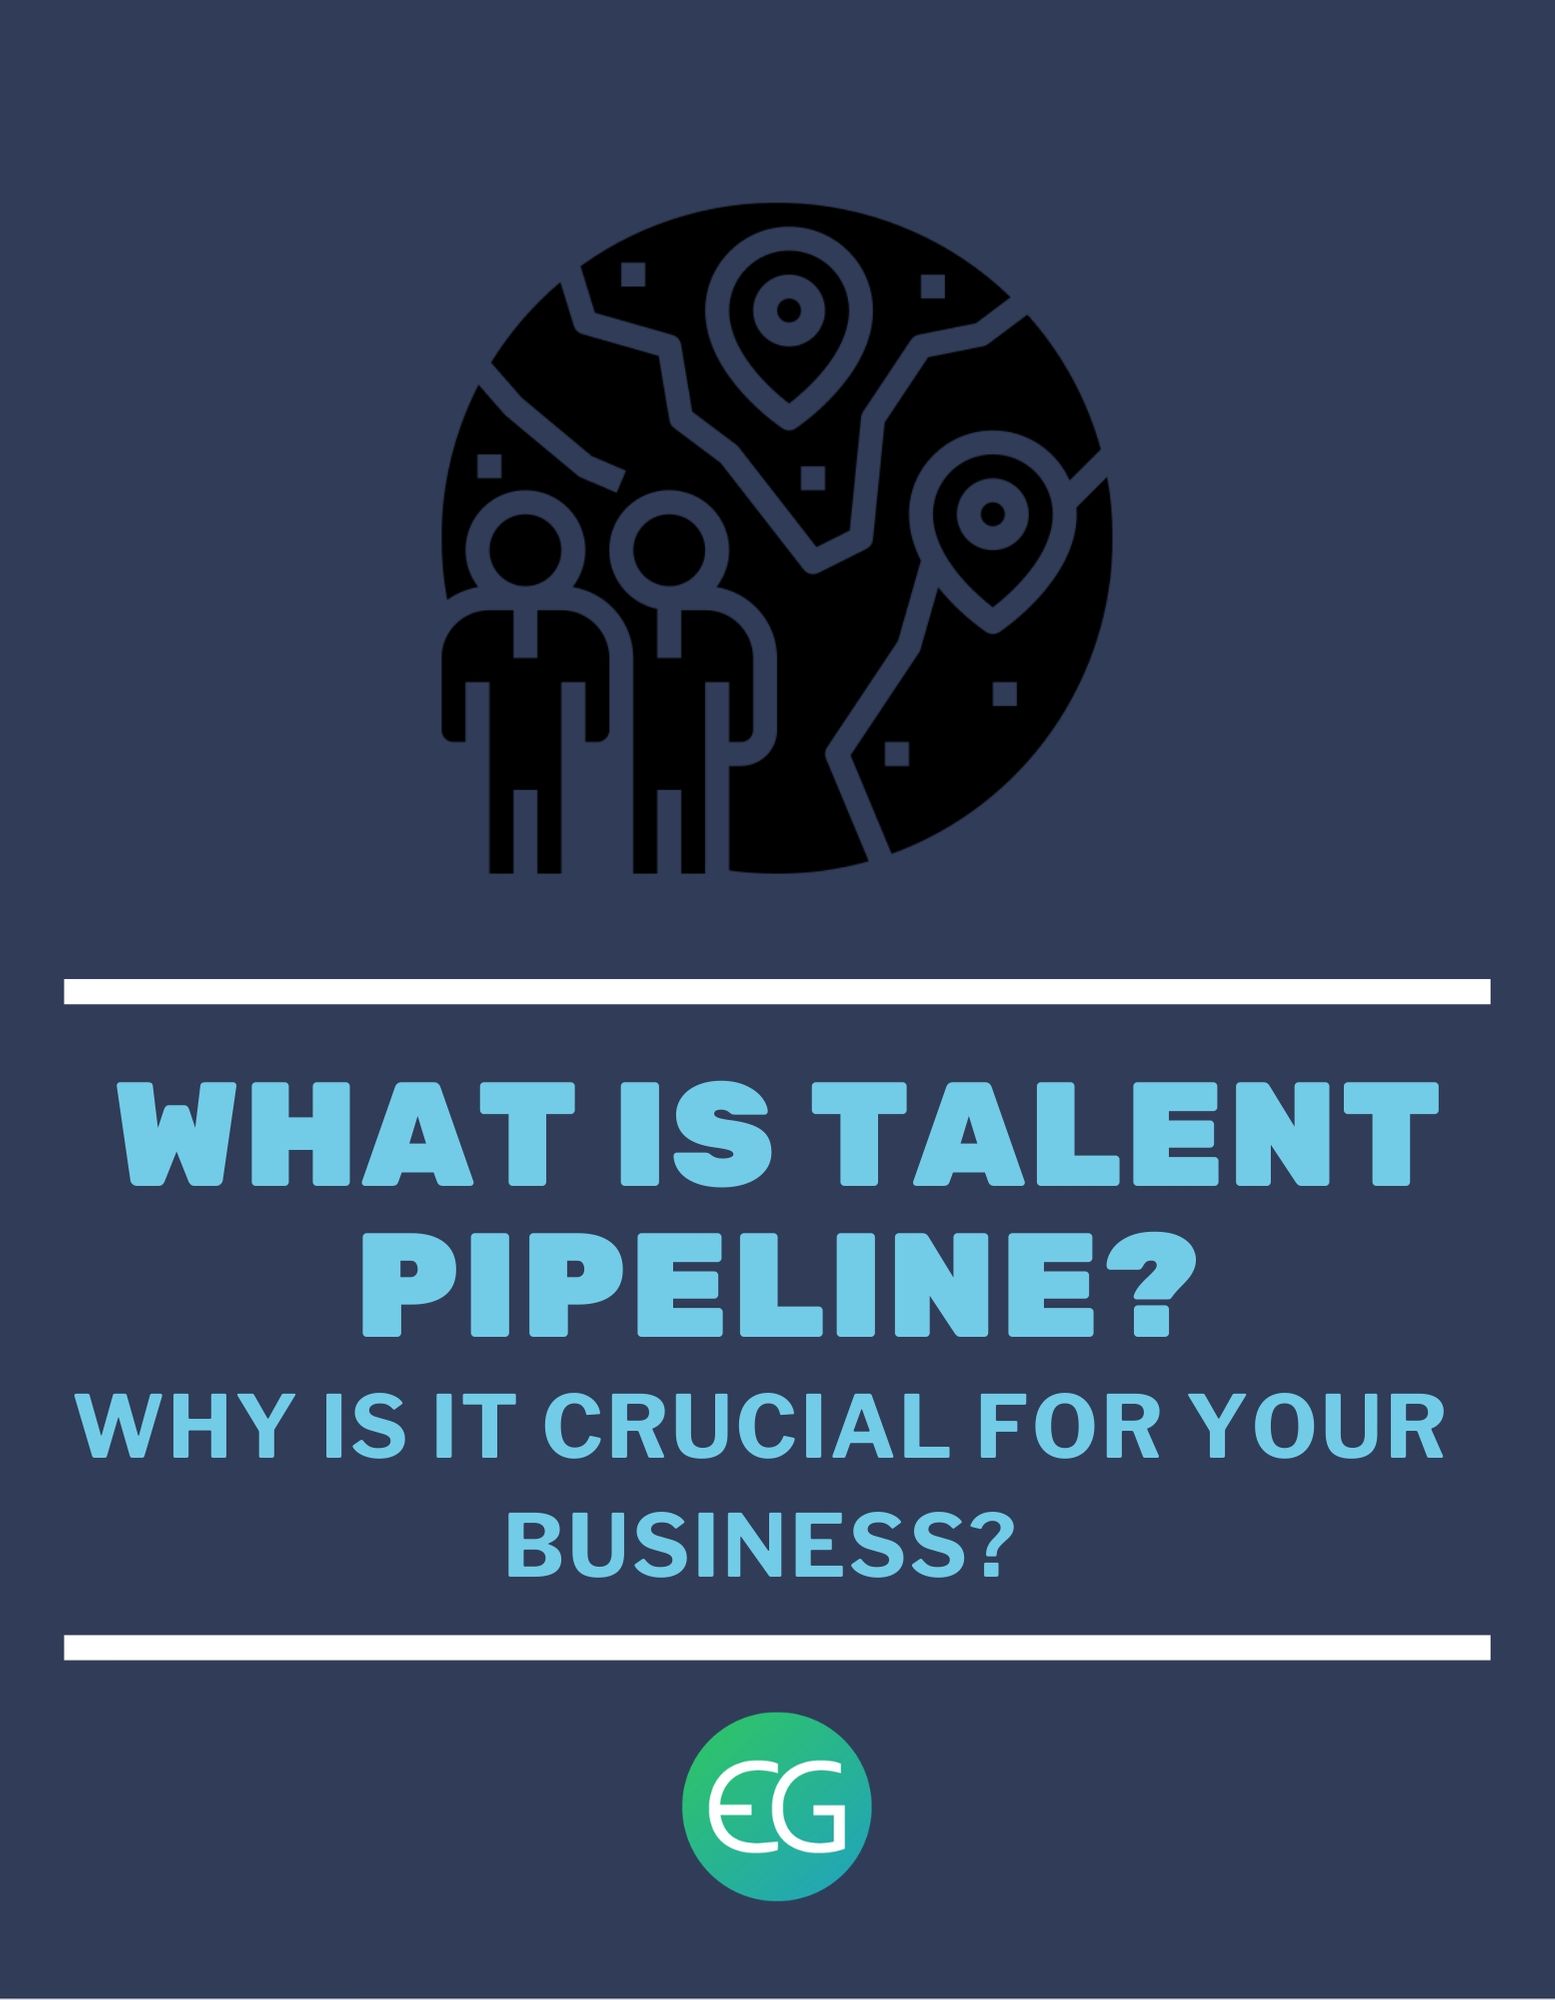 Talent pipeline